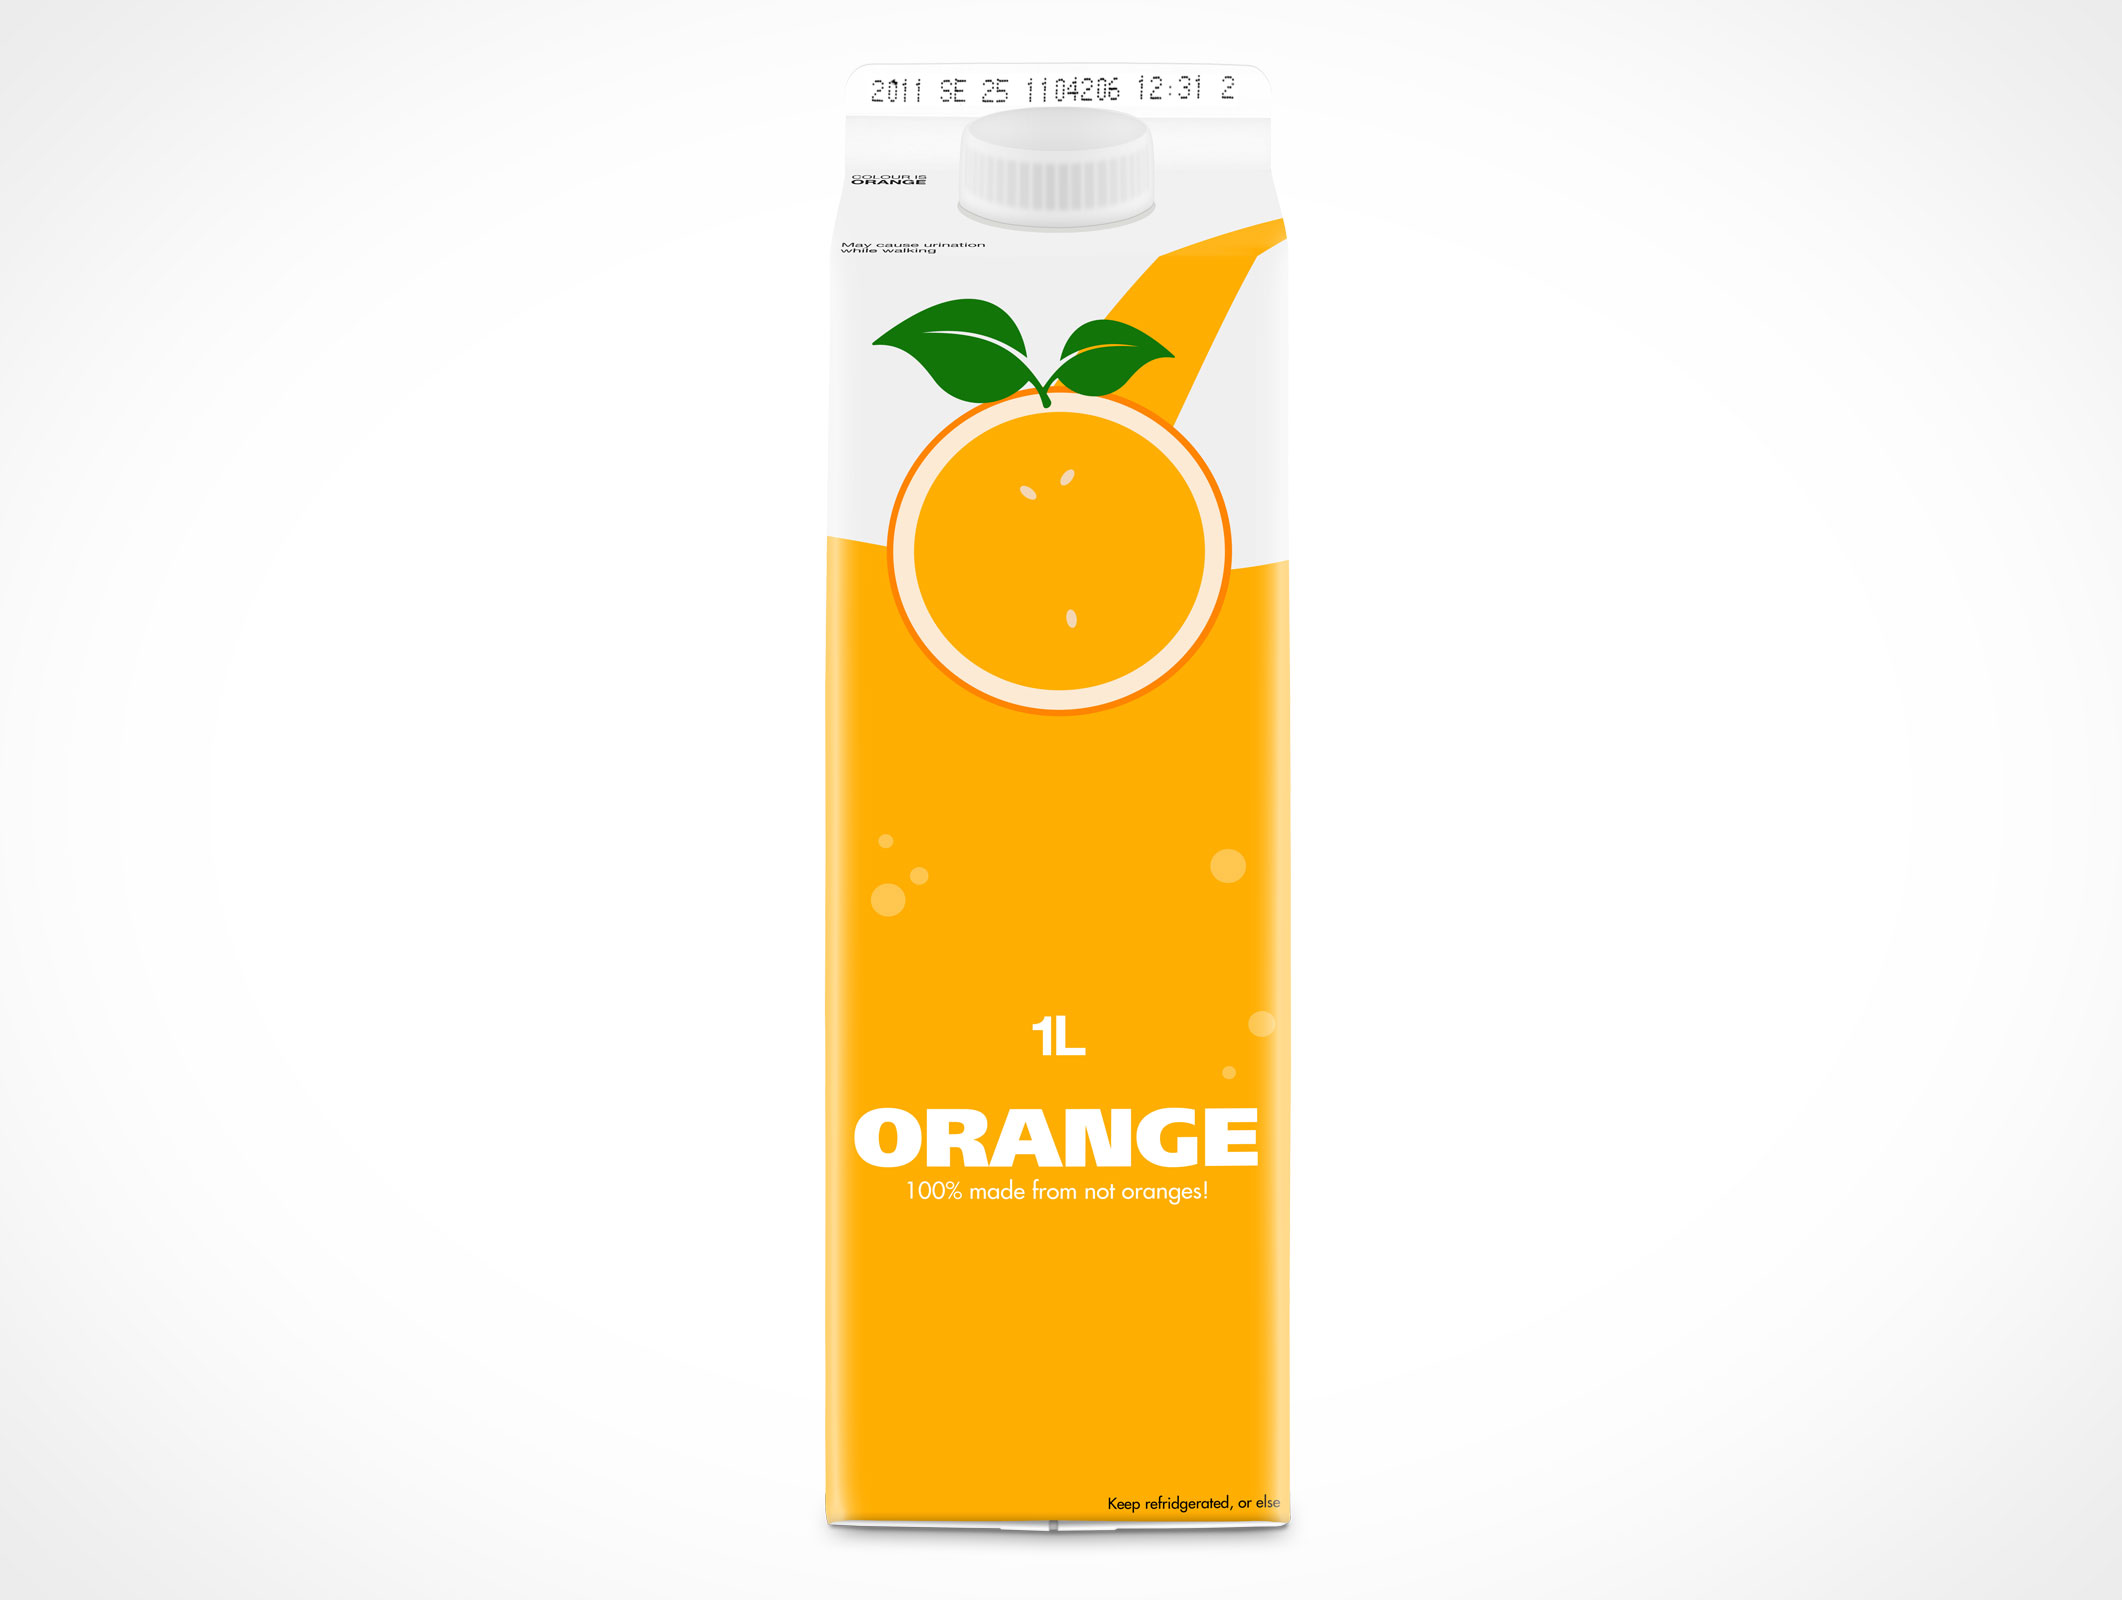 Orange Juice Carton   Clipart Panda   Free Clipart Images